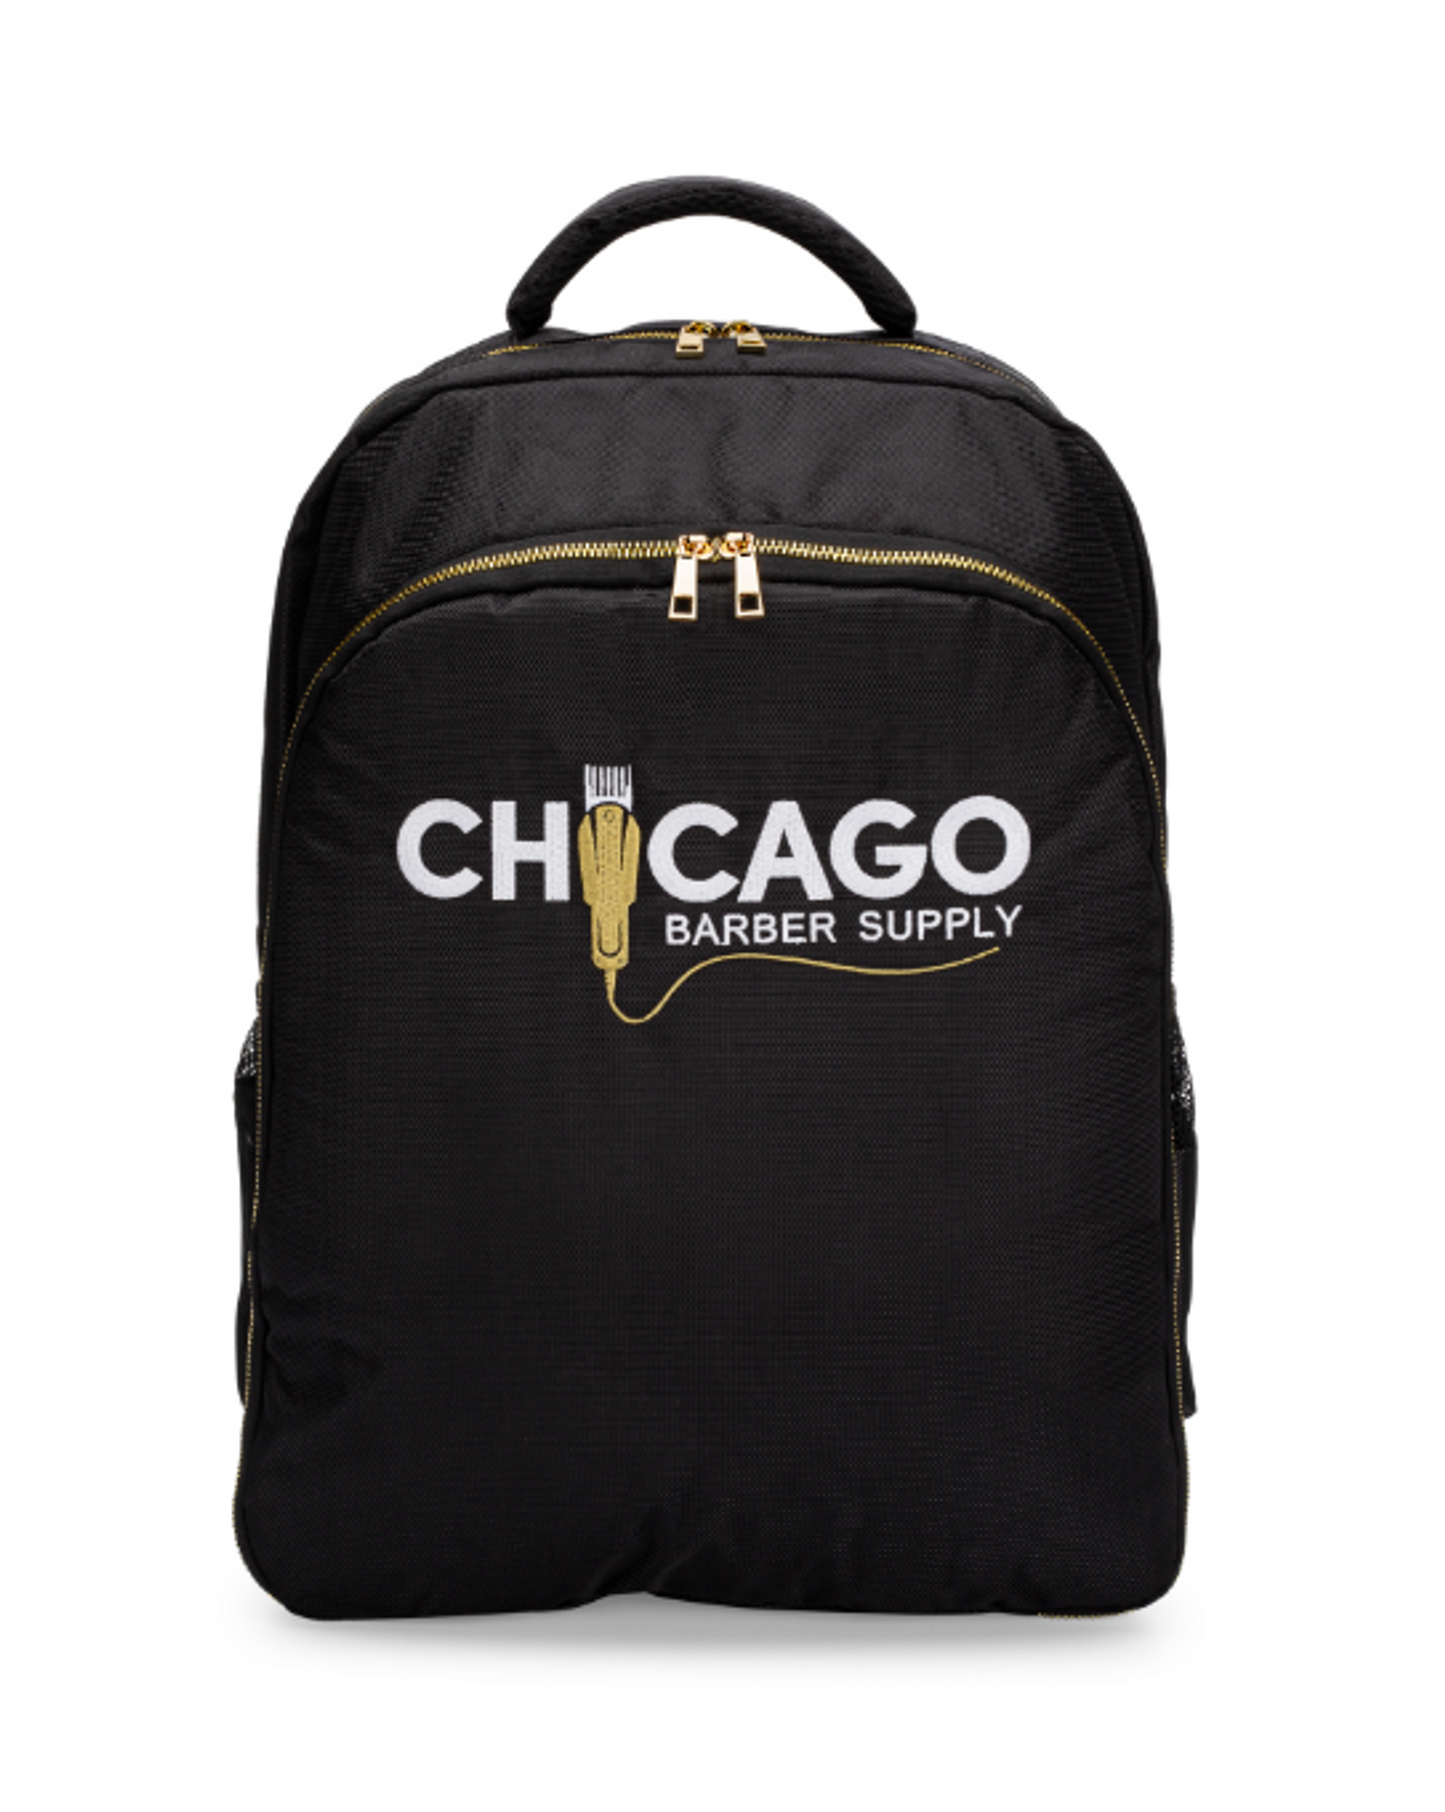 Chicago Barber Supply Professional Barber Backpack